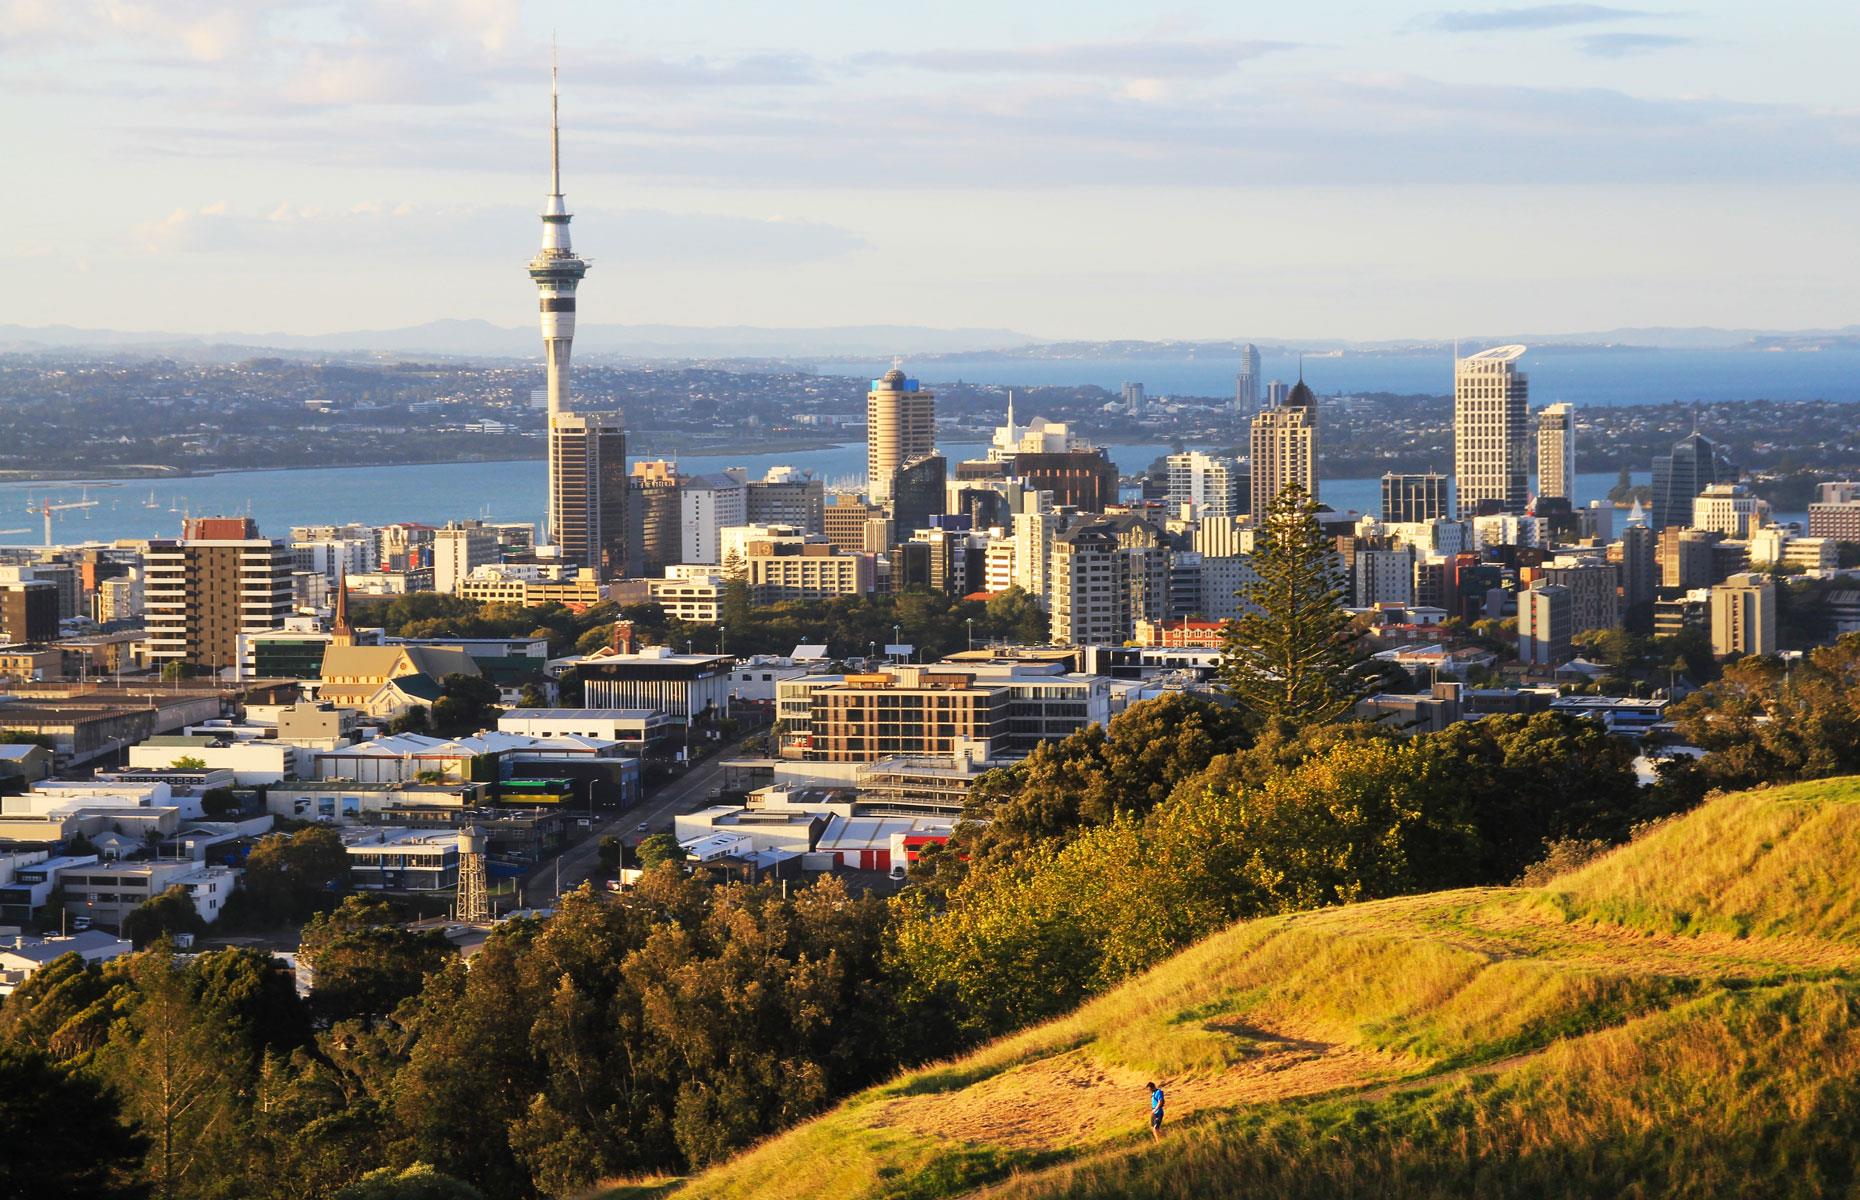 New Zealand – 4,000 extra millionaires 